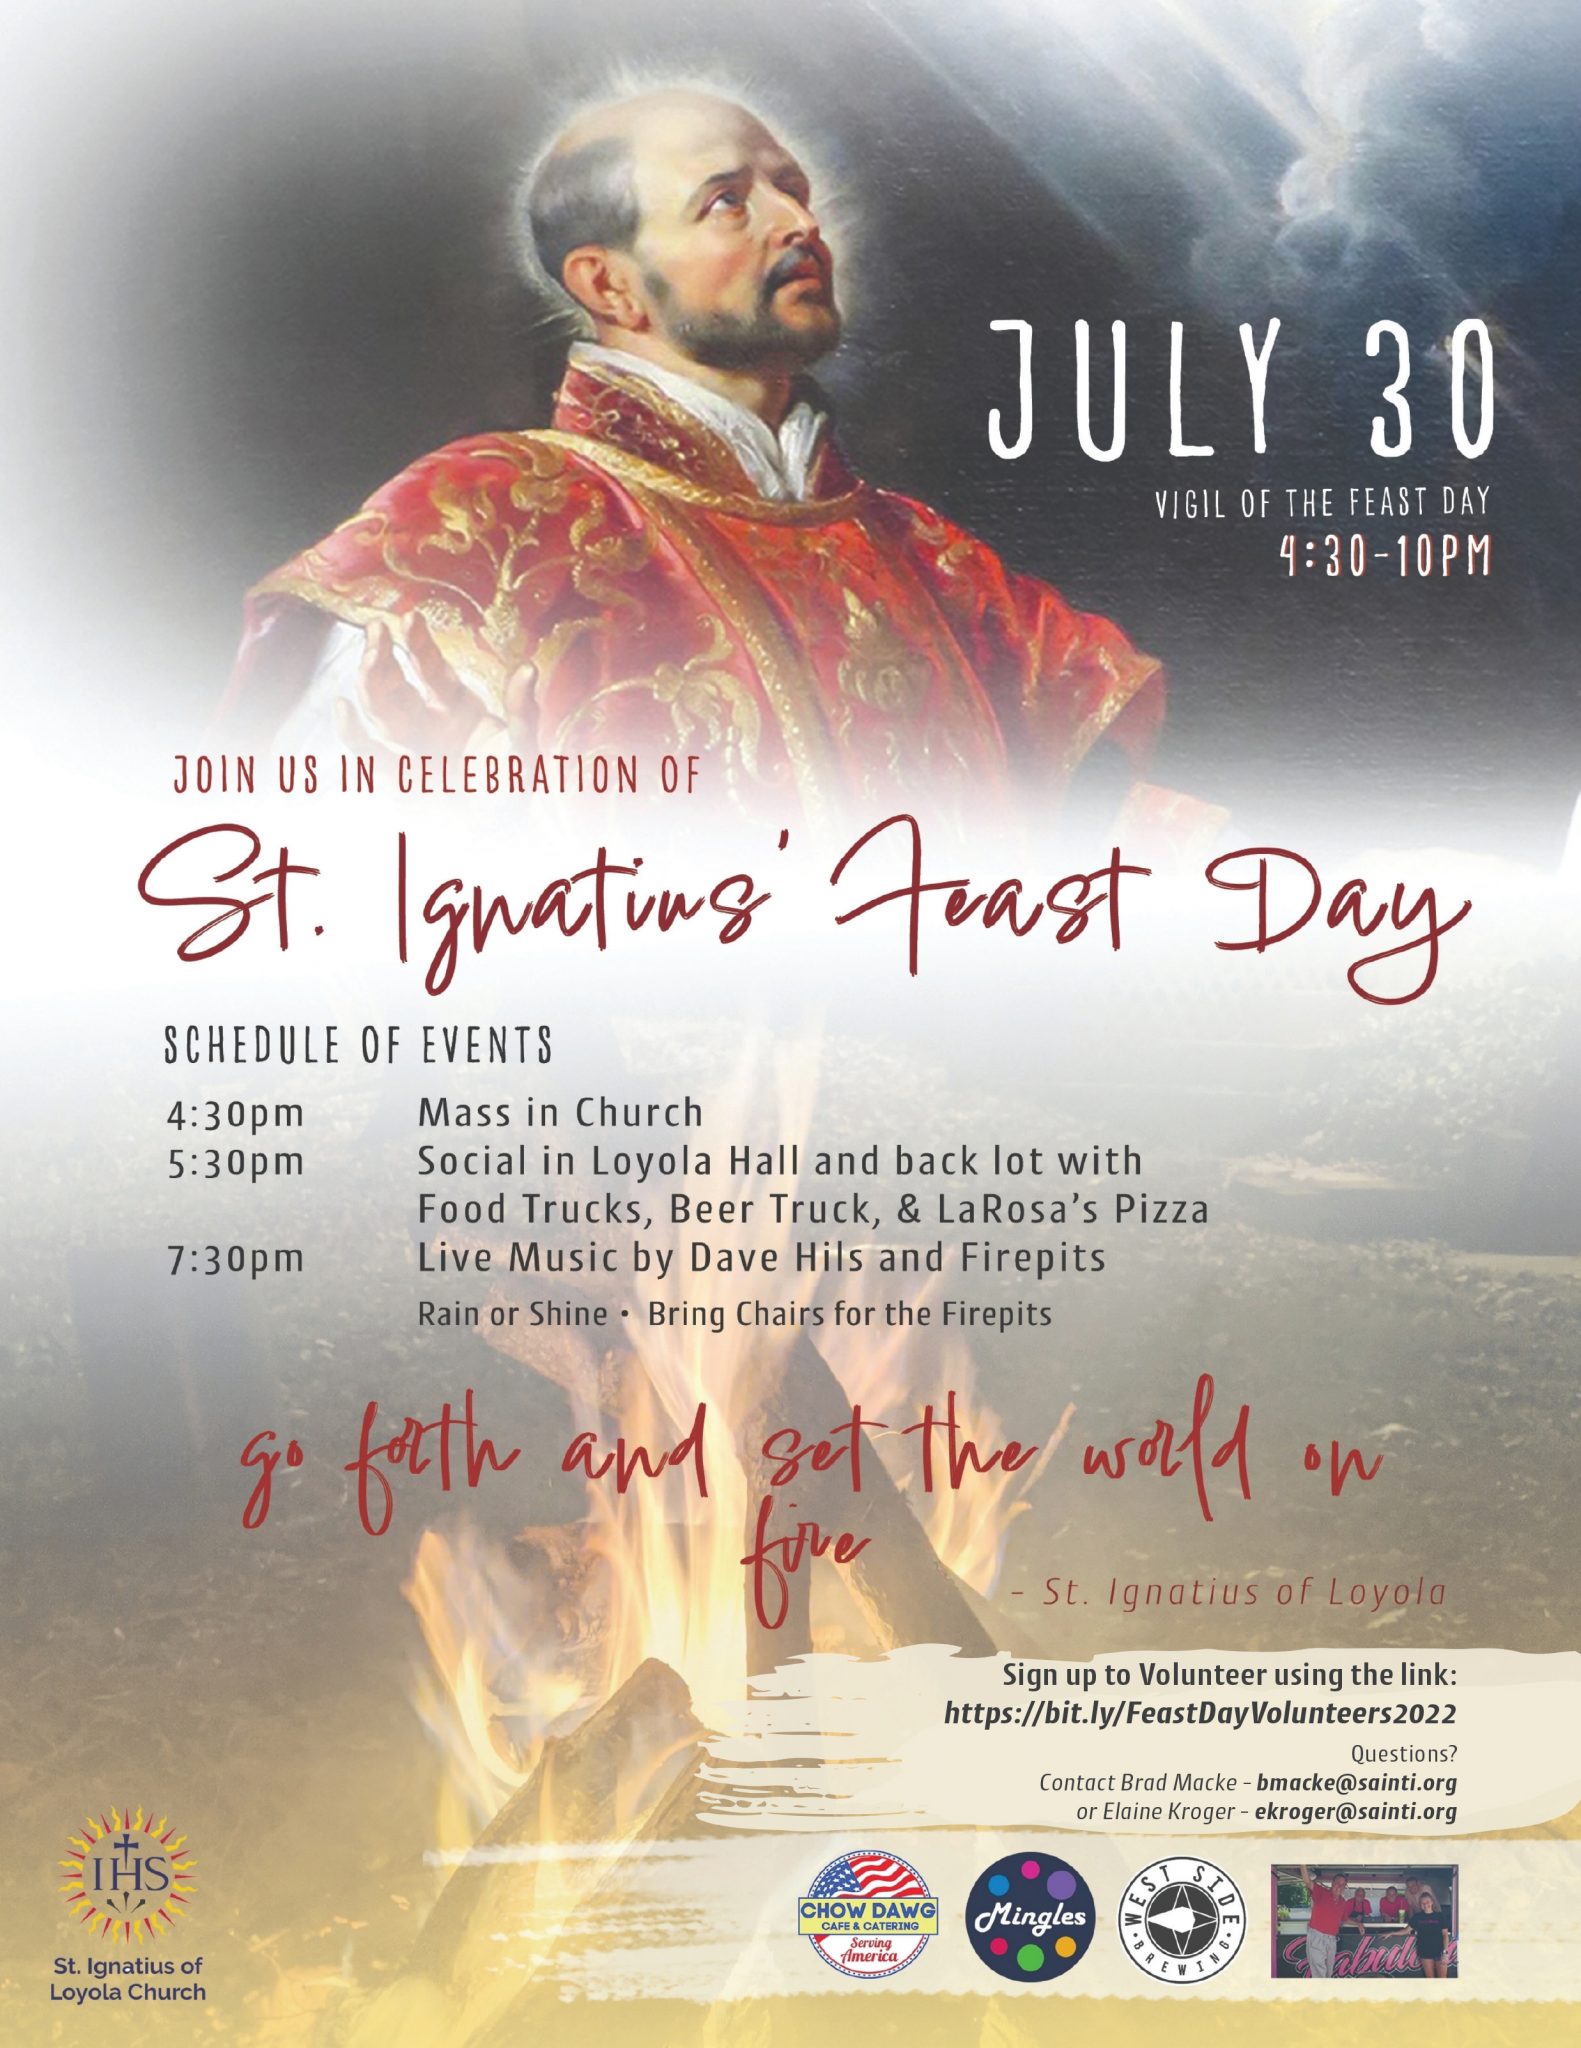 2022 St. Ignatius Feast Day Celebrate St. Ignatius of Loyola Church